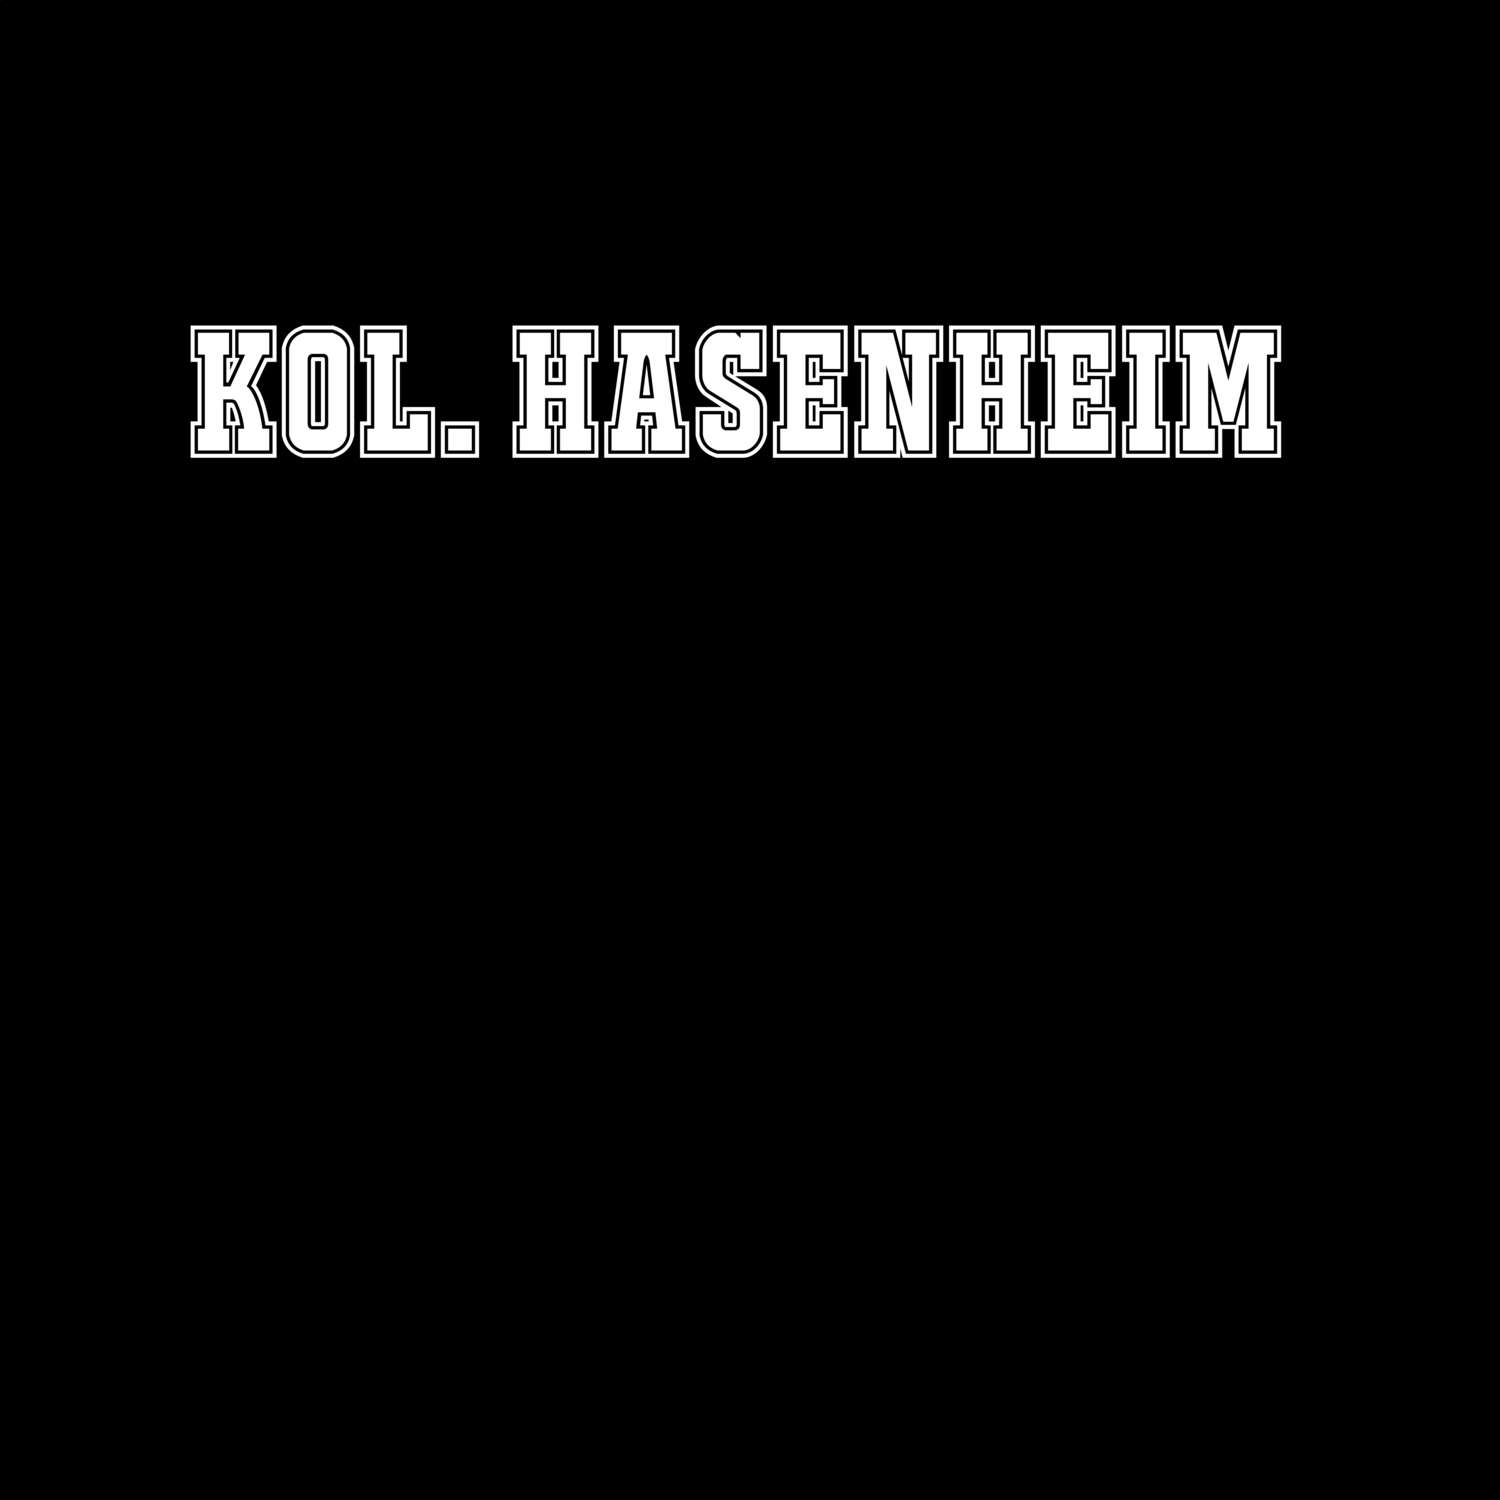 Kol. Hasenheim T-Shirt »Classic«